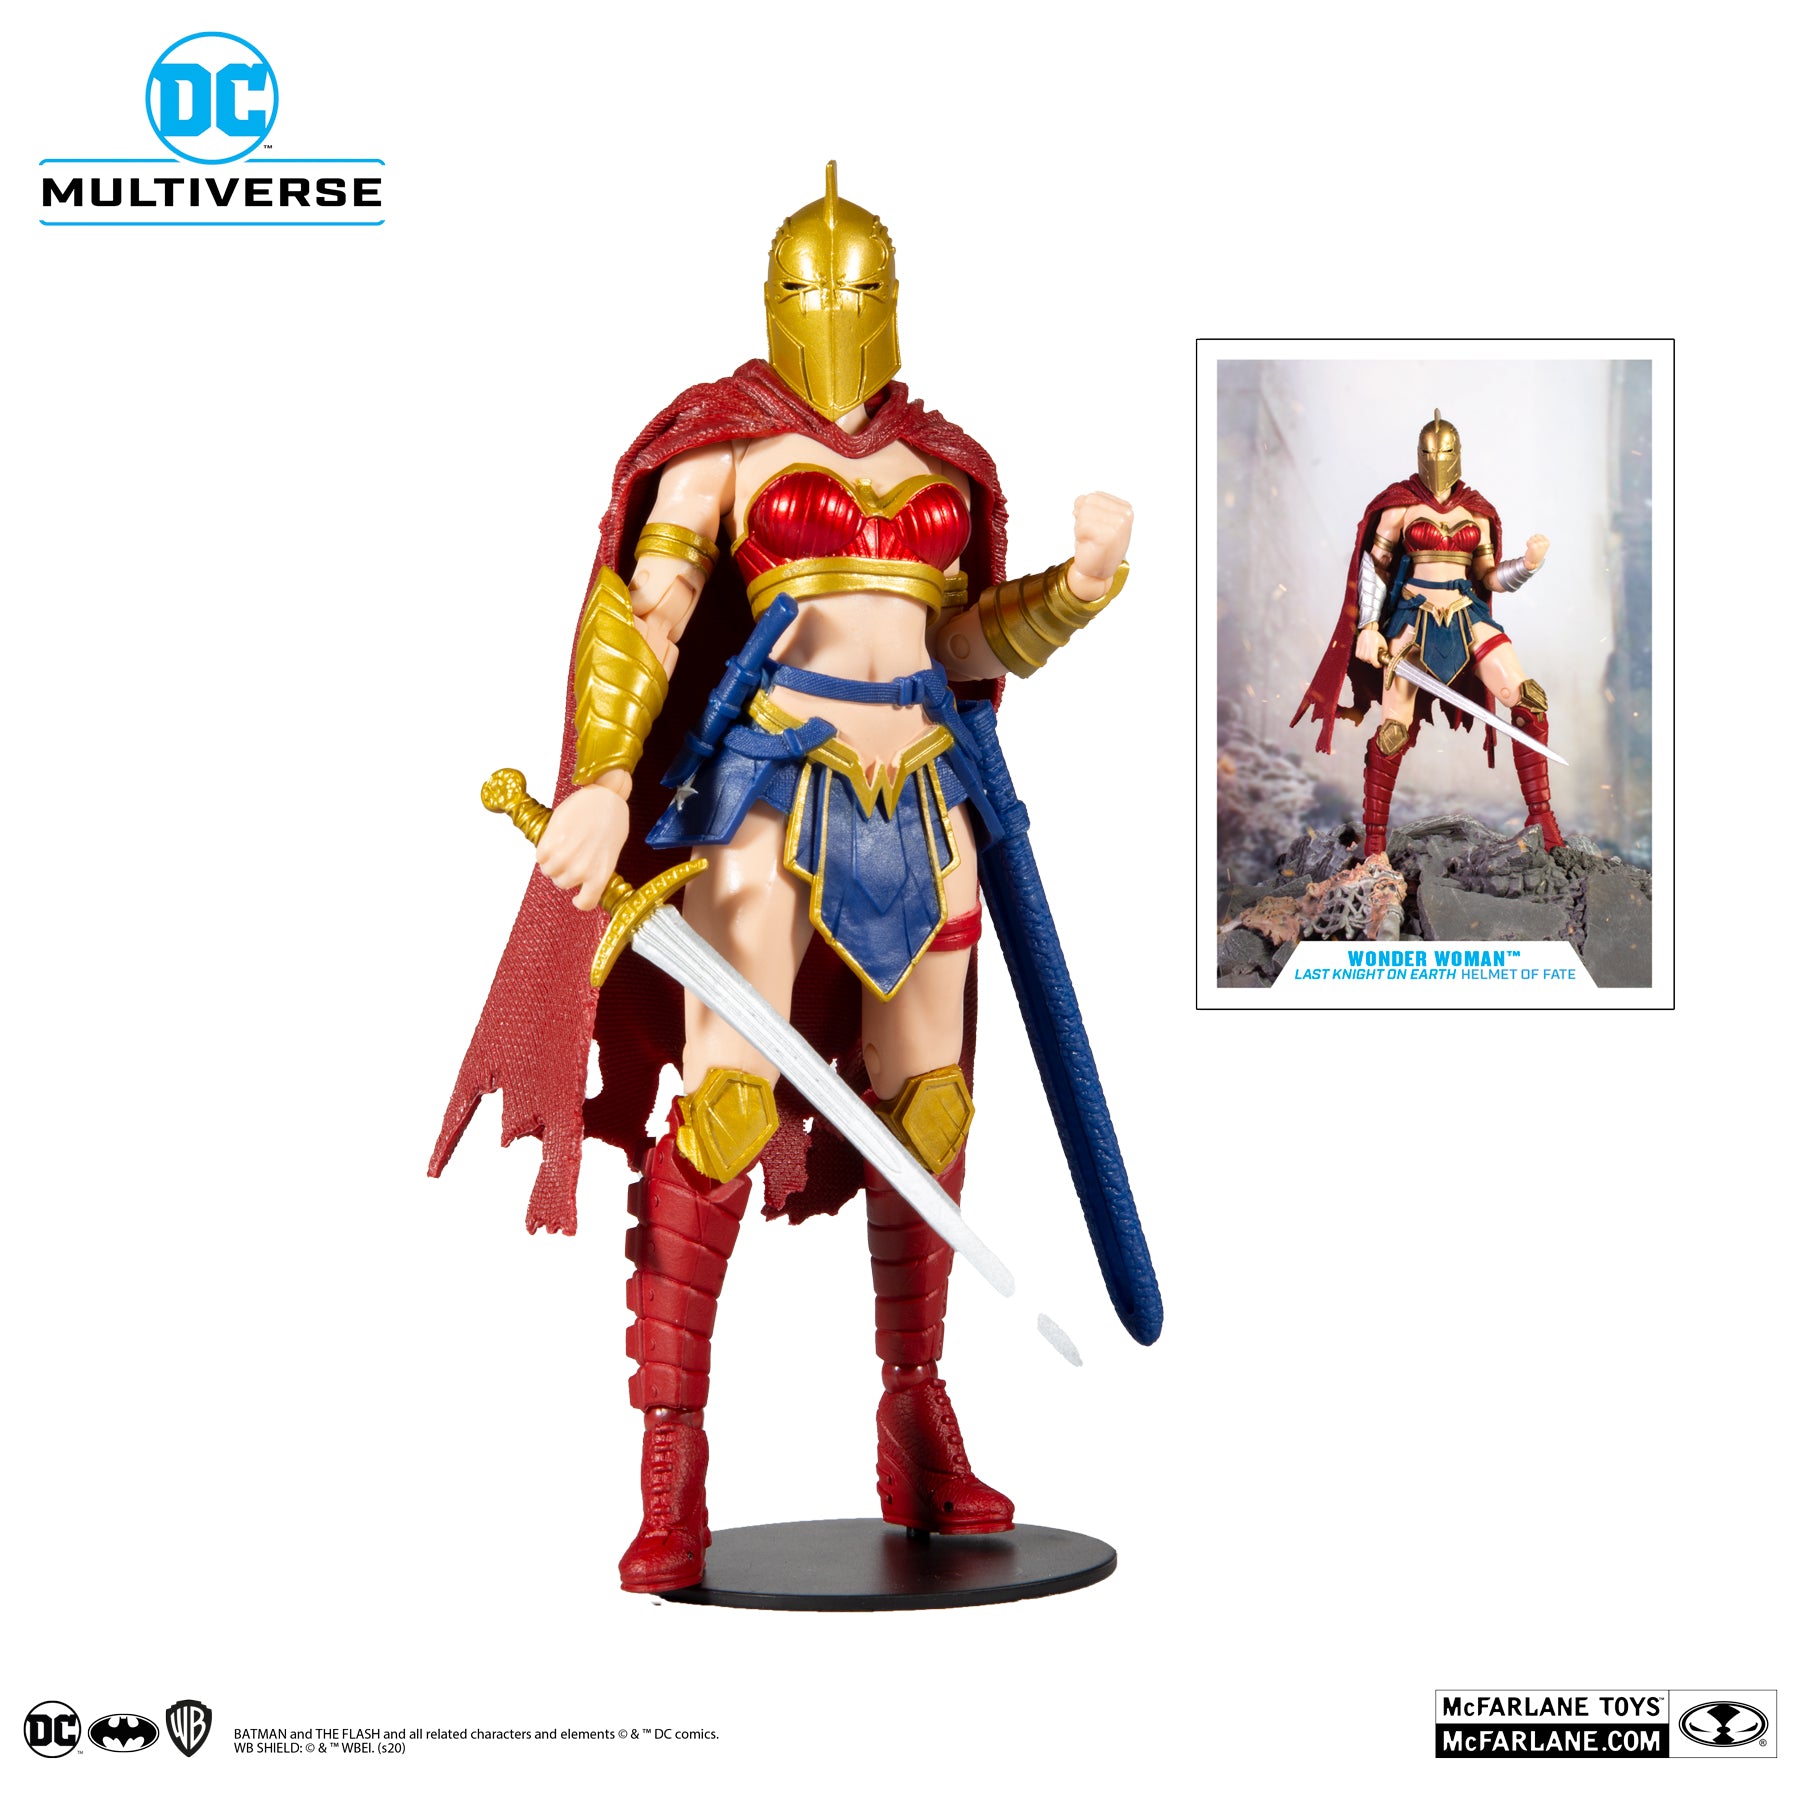 DC Multiverse Wonder Woman Last Knight on Earth Helmet of Faith - McFarlane Toys